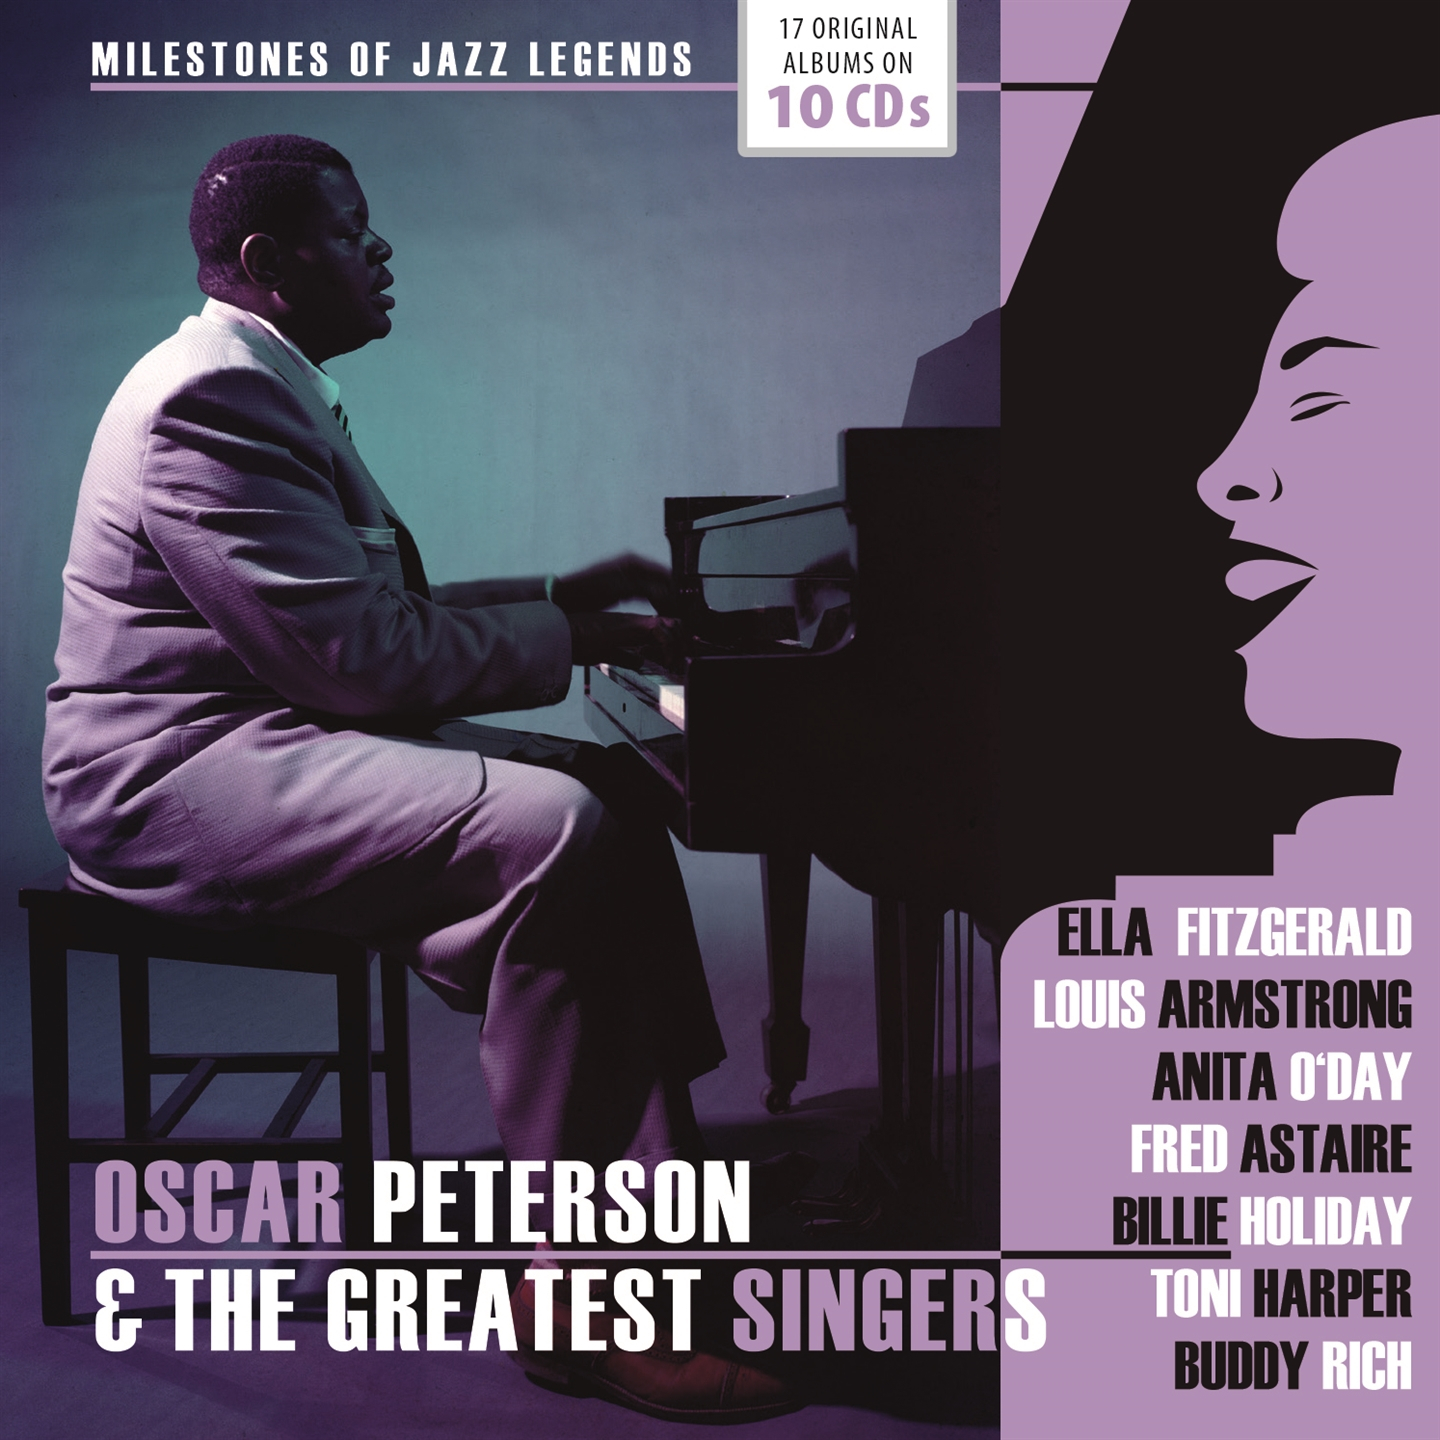 OSCAR PETERSON & THE GREATEST SINGERS - ORIGINAL ALBUMS